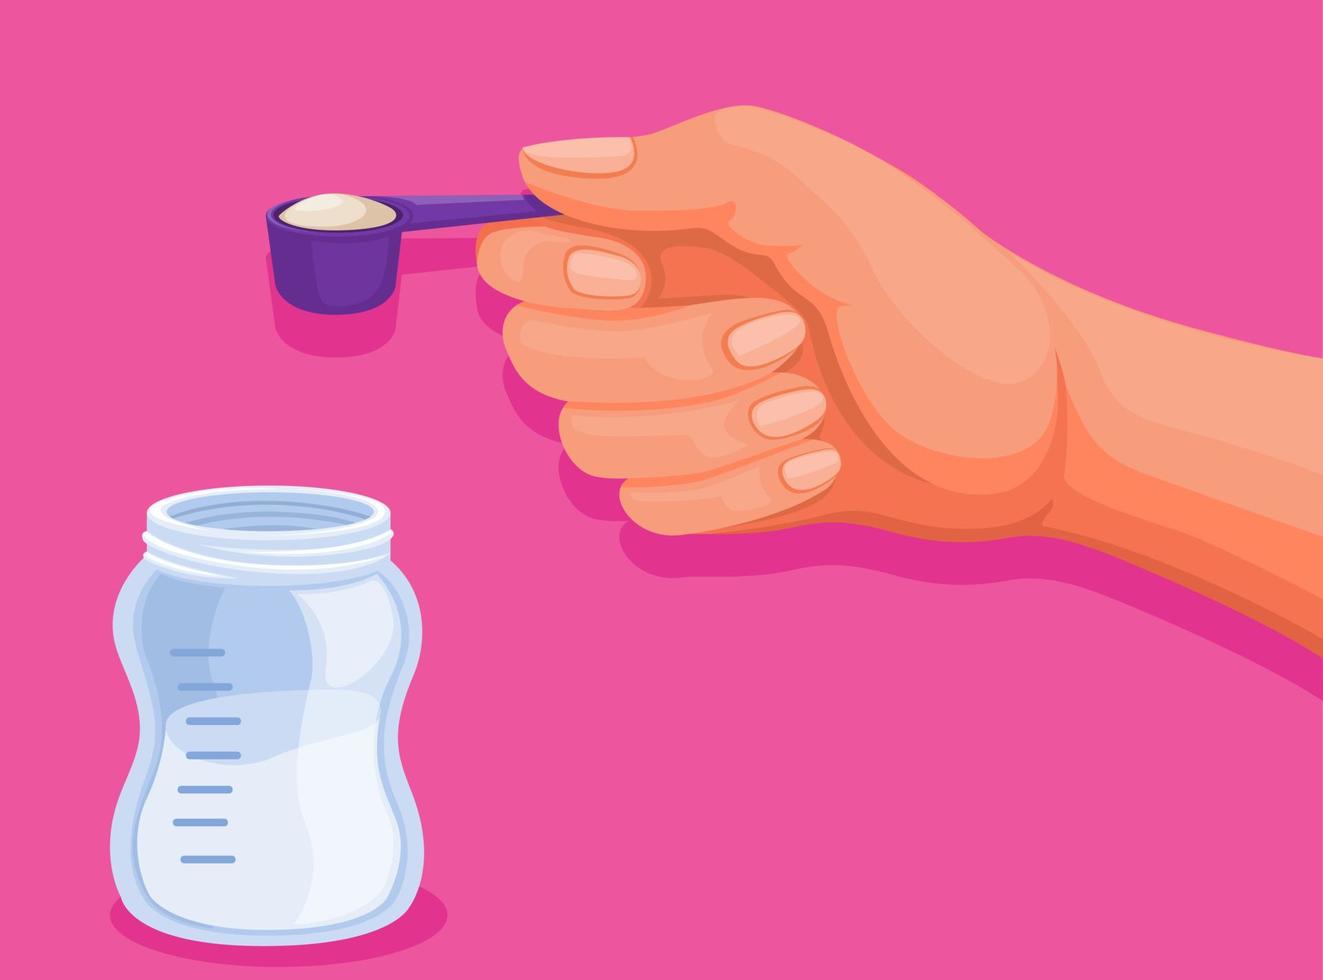 Hand holding spoon milk powder to bottle. baby milk symbol cartoon illustration vector